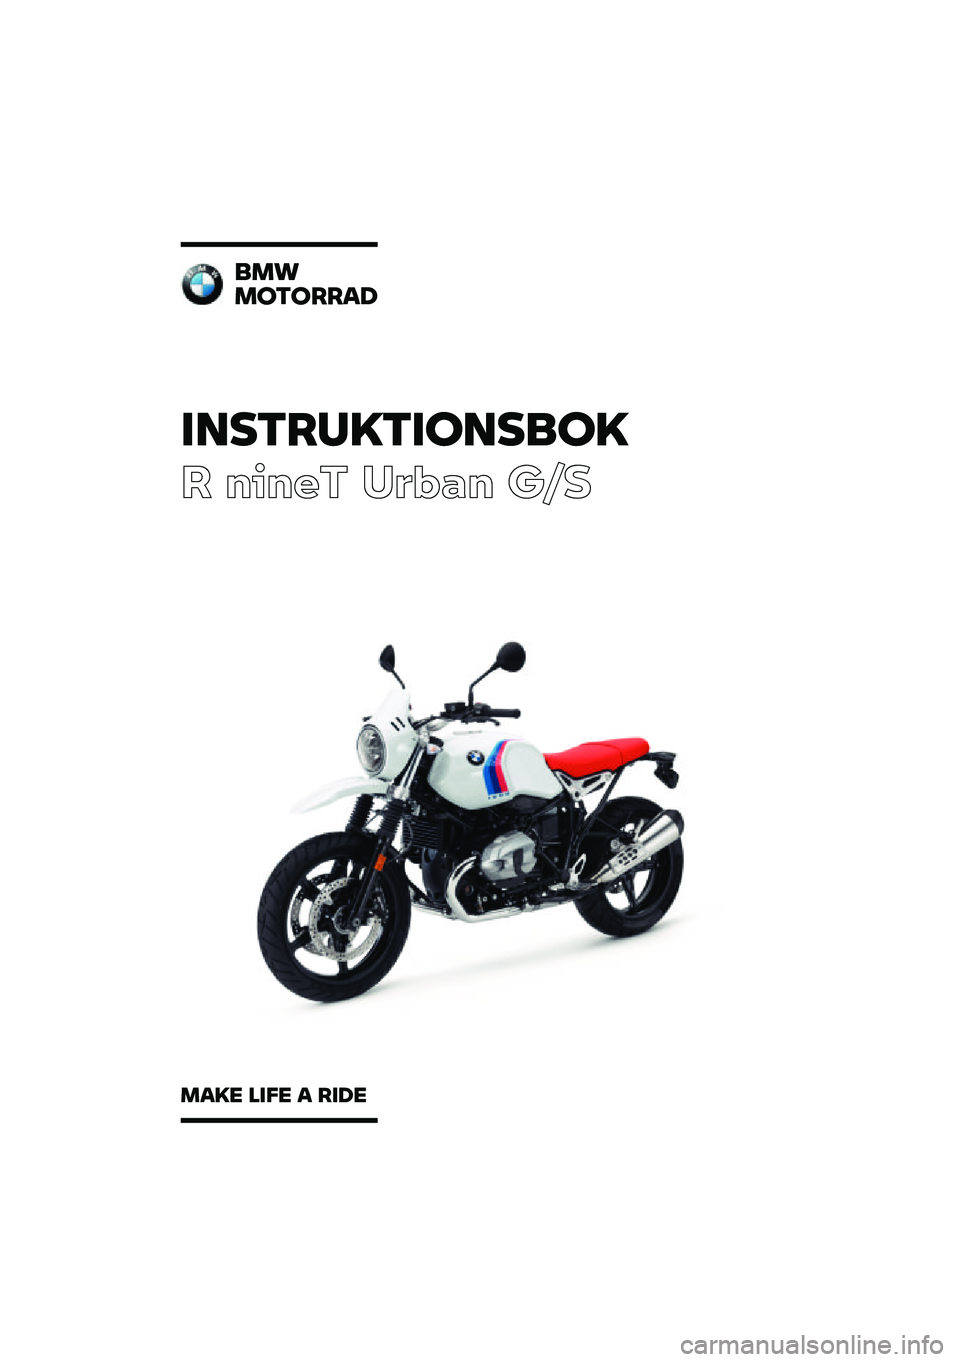 BMW MOTORRAD R NINE T URVAN G/S 2020  Instruktionsbok (in Swedish) �������\b���	���
�	�\b
� ����� ��\b�	�
� ��\f�
�
��\f
��	��	���
�
��
�\b� ���� �
 ���� 